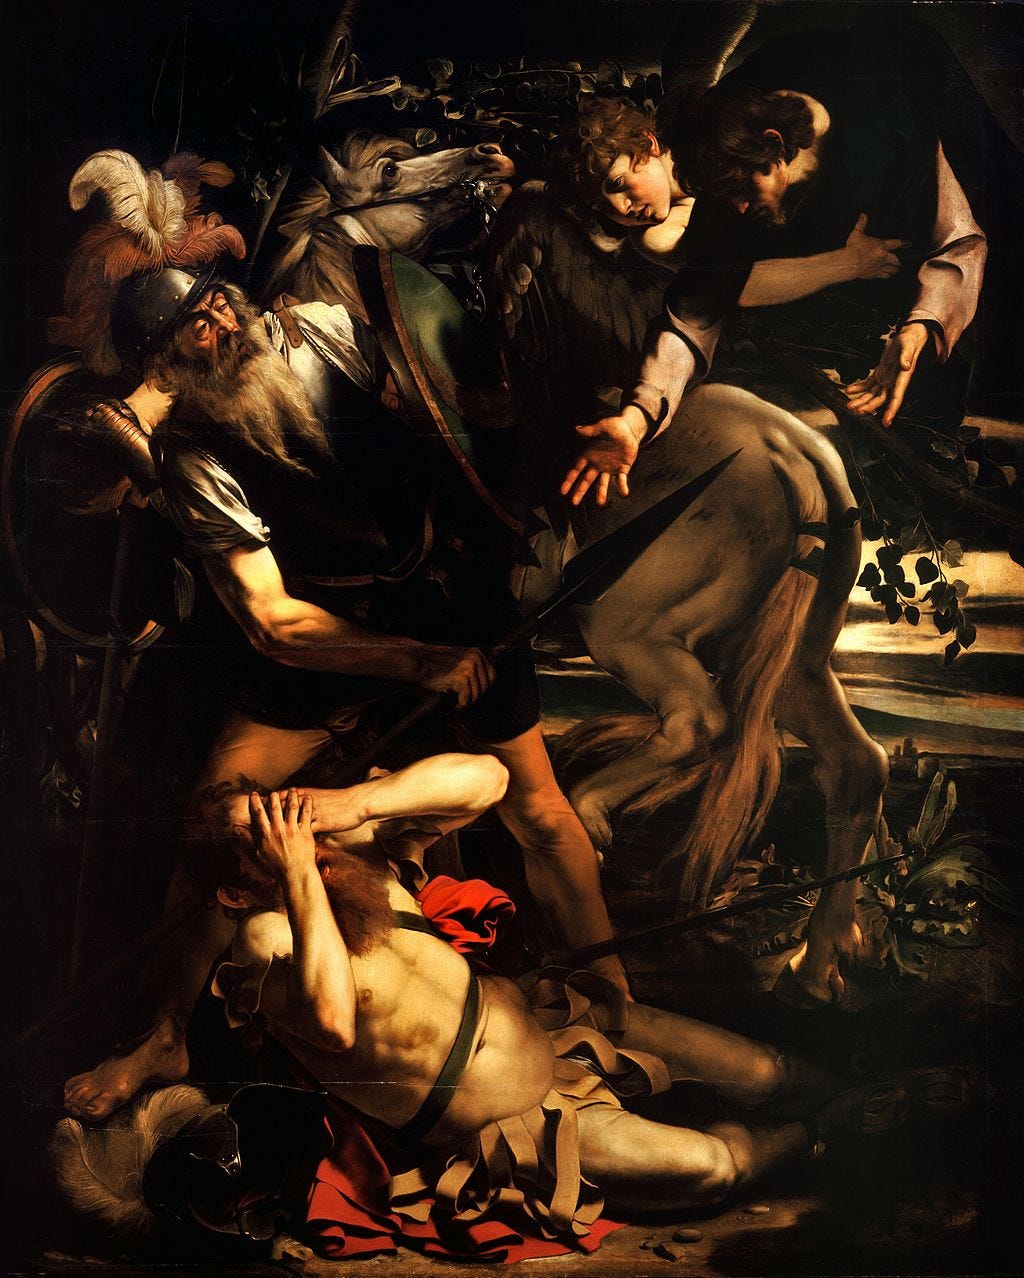 The Conversion of Saint Paul-Caravaggio (c. 1600-1).jpg